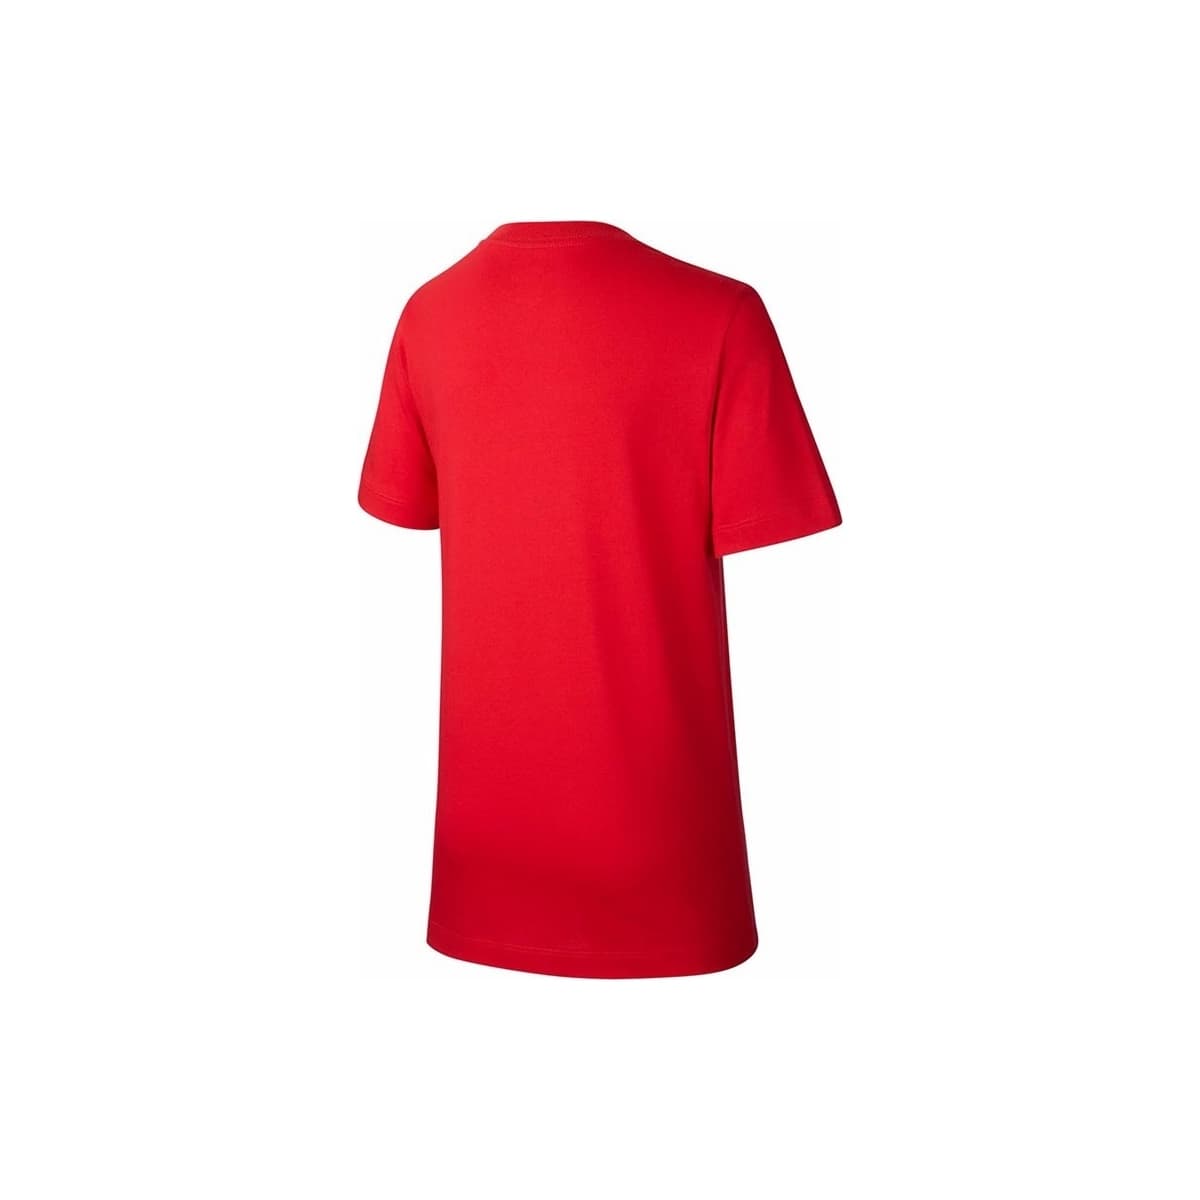 Futura İcon Çocuk Kırmızı Spor Tişört (AR5252-659)